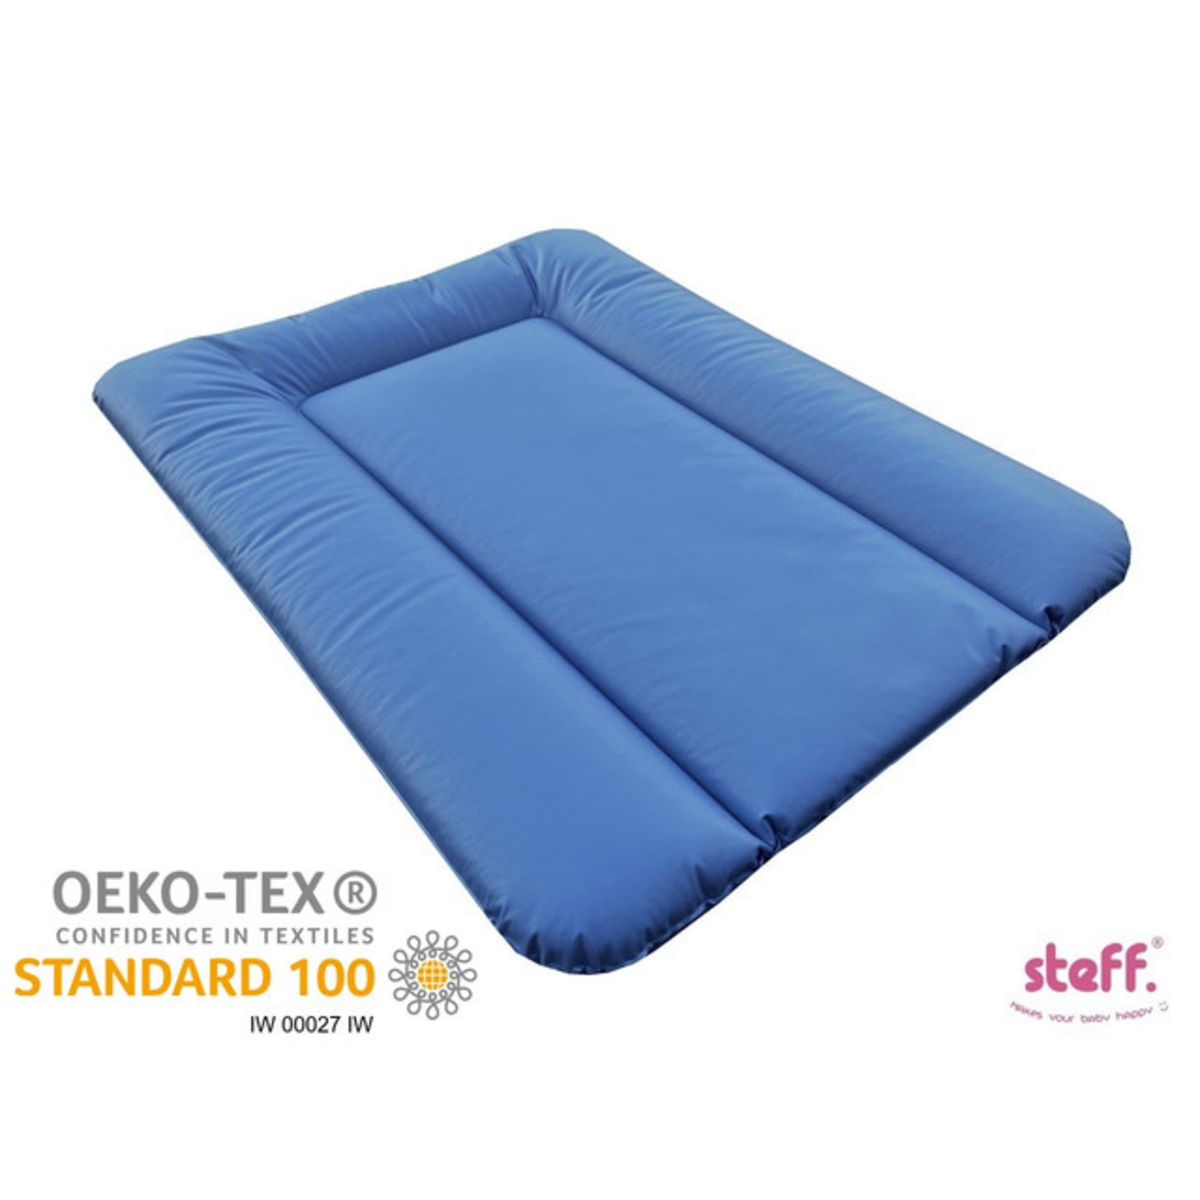  Steff - Matelas à langer - 70x50 cm - Bleu indigo - Label de qualité OEKO-TEX standard 100